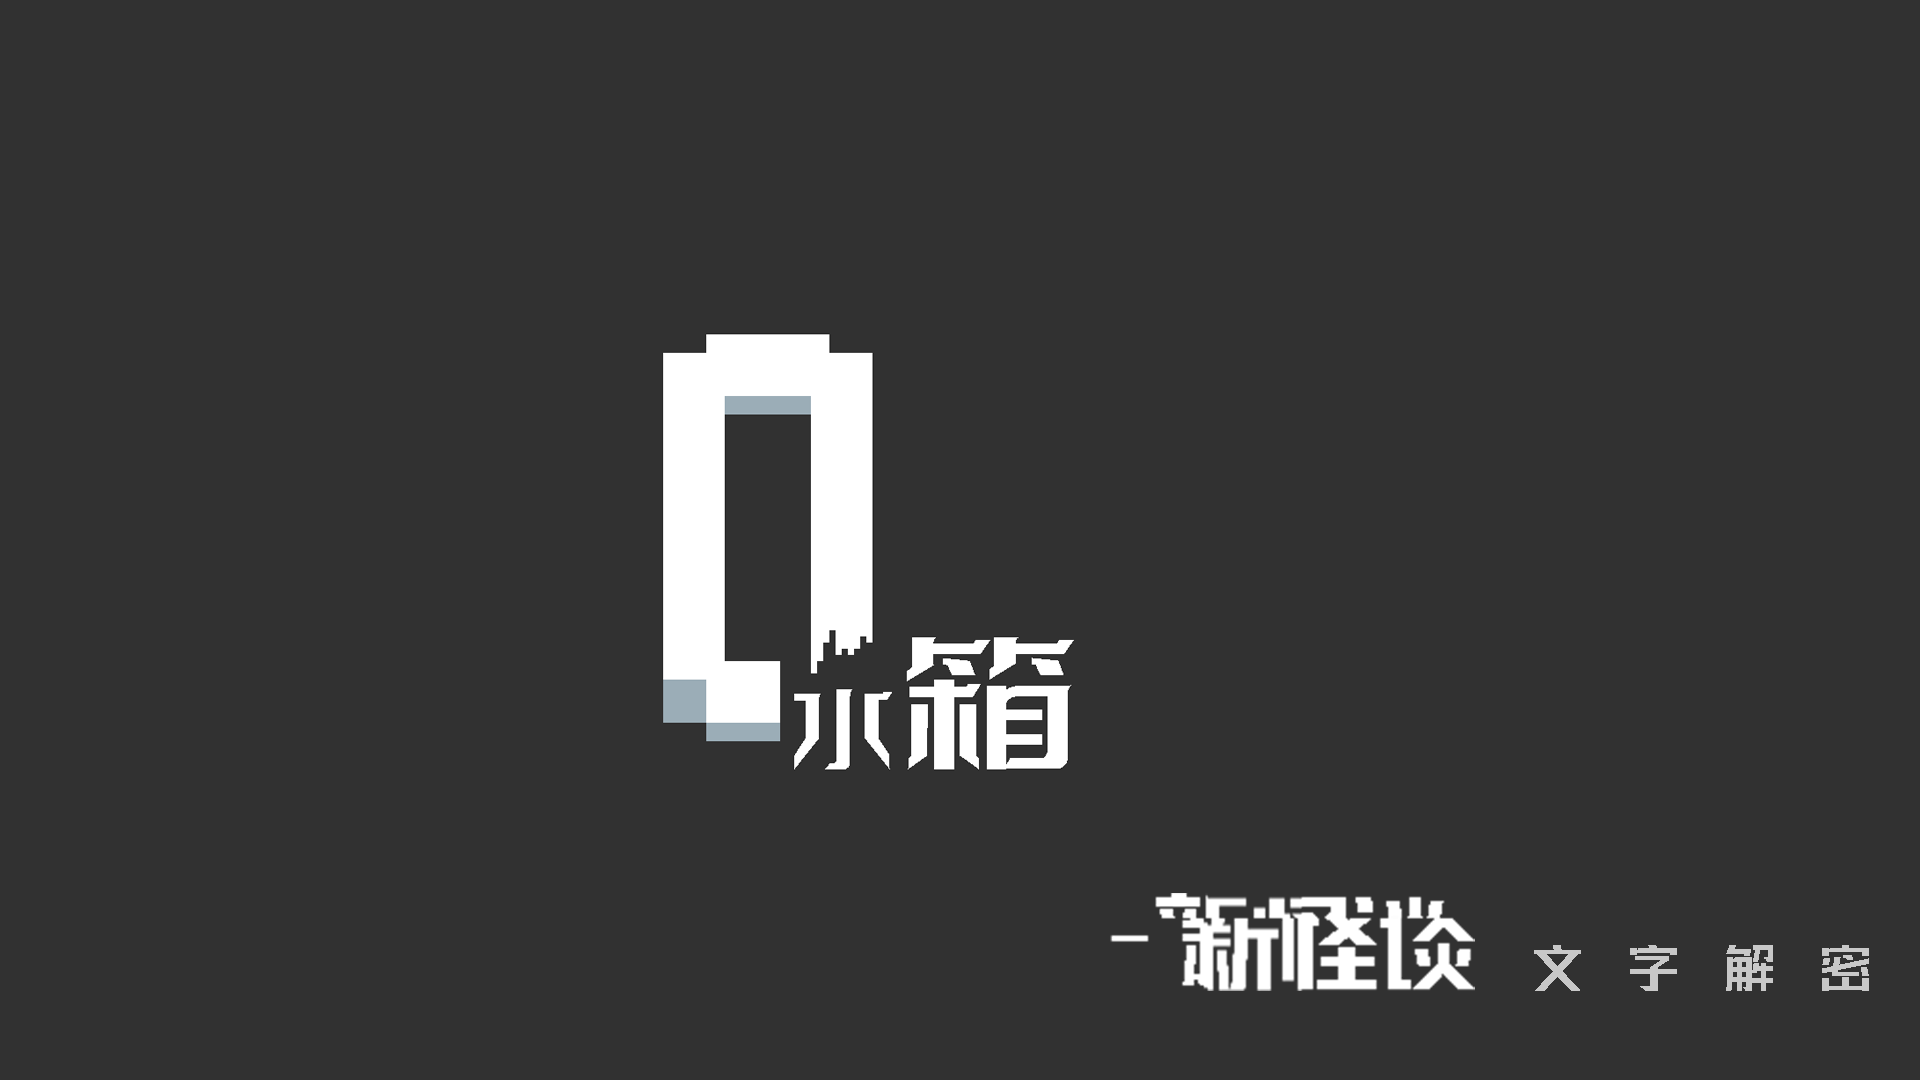 Banner of 水槽 